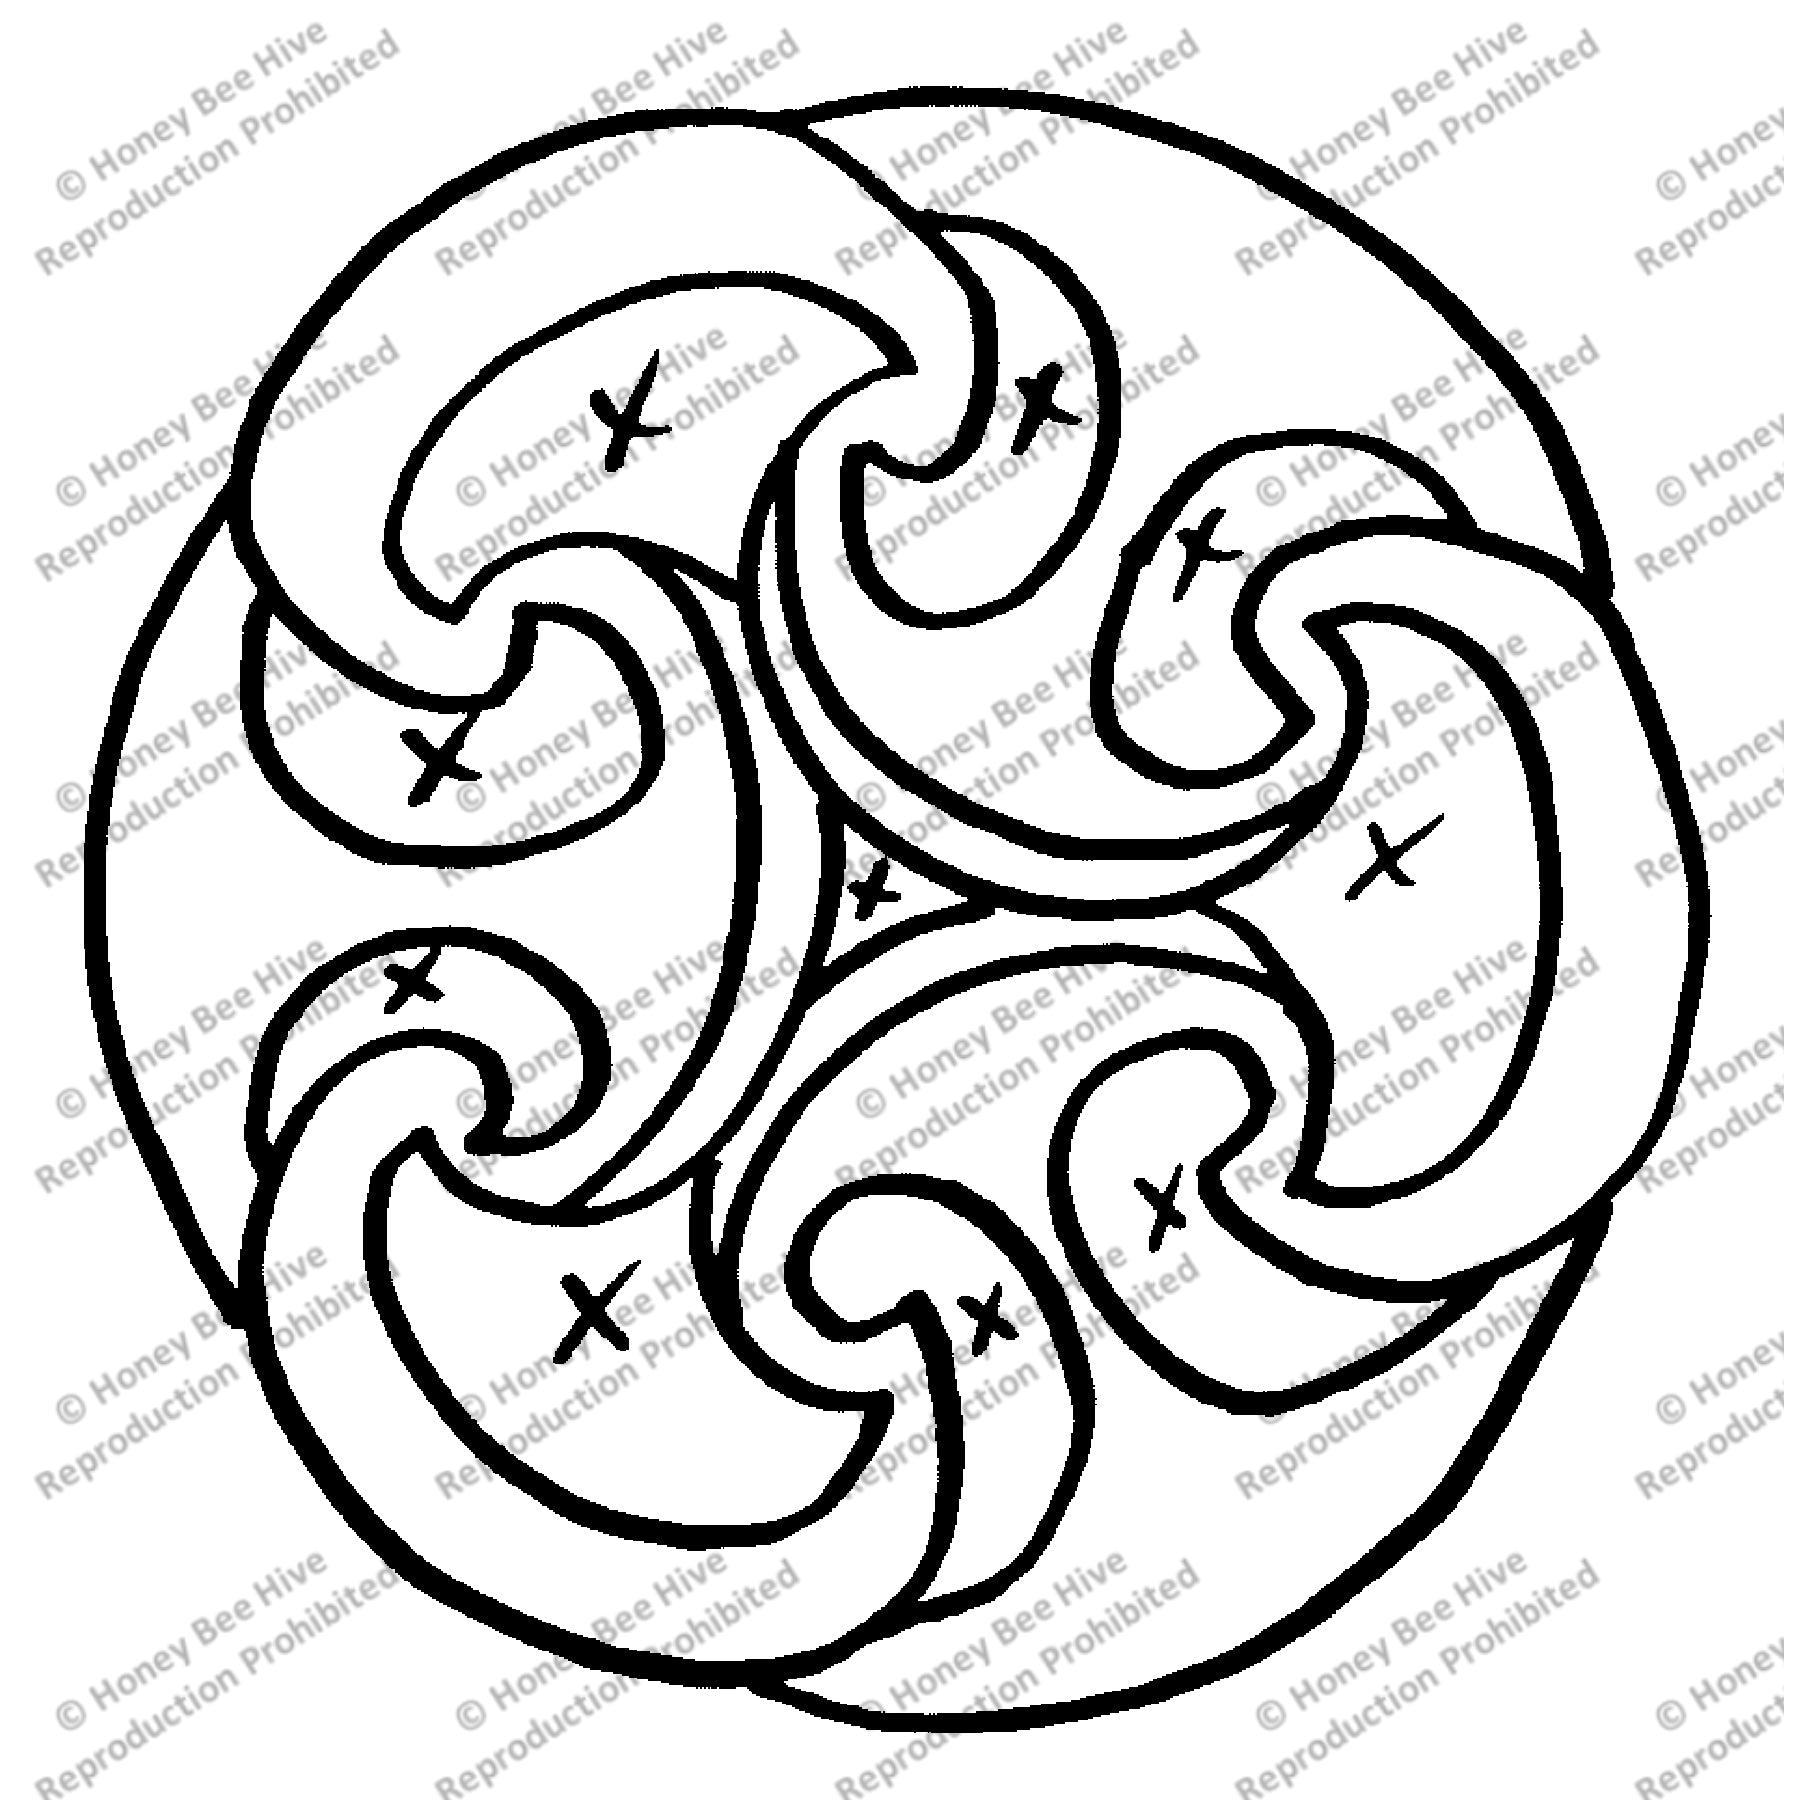 Celtic Horse Ornaments - Ornament #1, rug hooking pattern